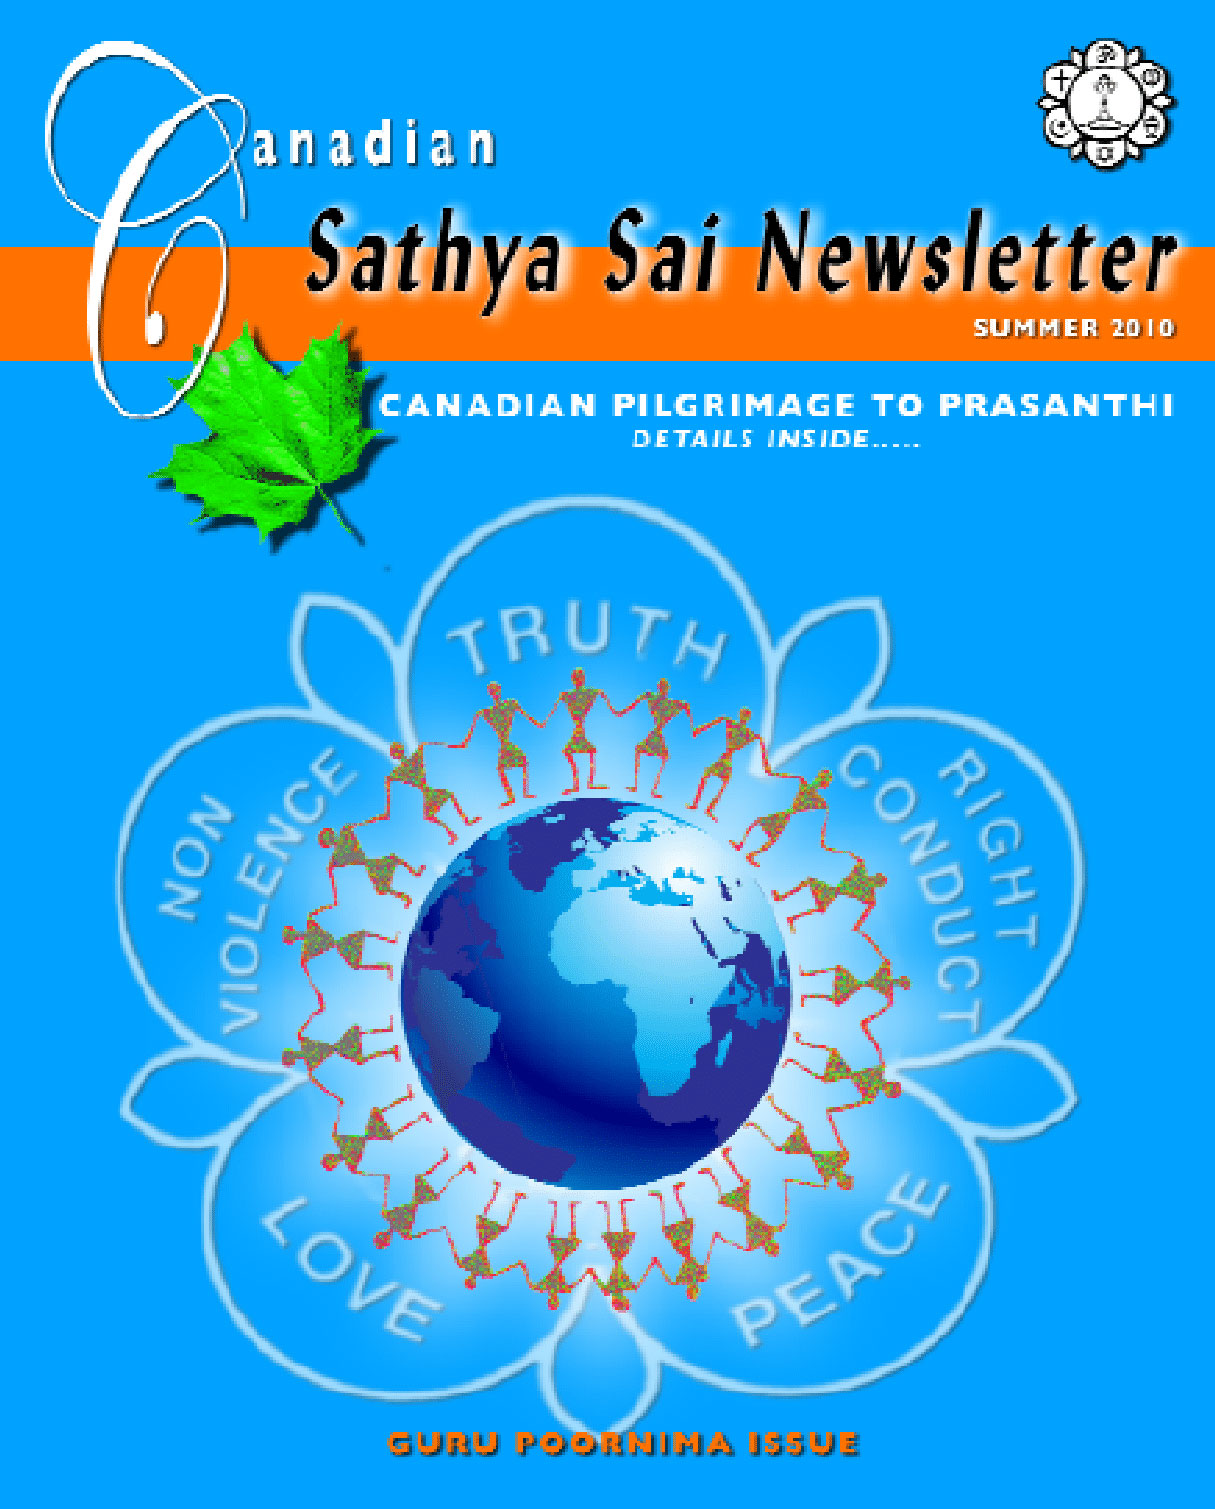 The Canadian Sathya Sai Magazine - Summer 2010